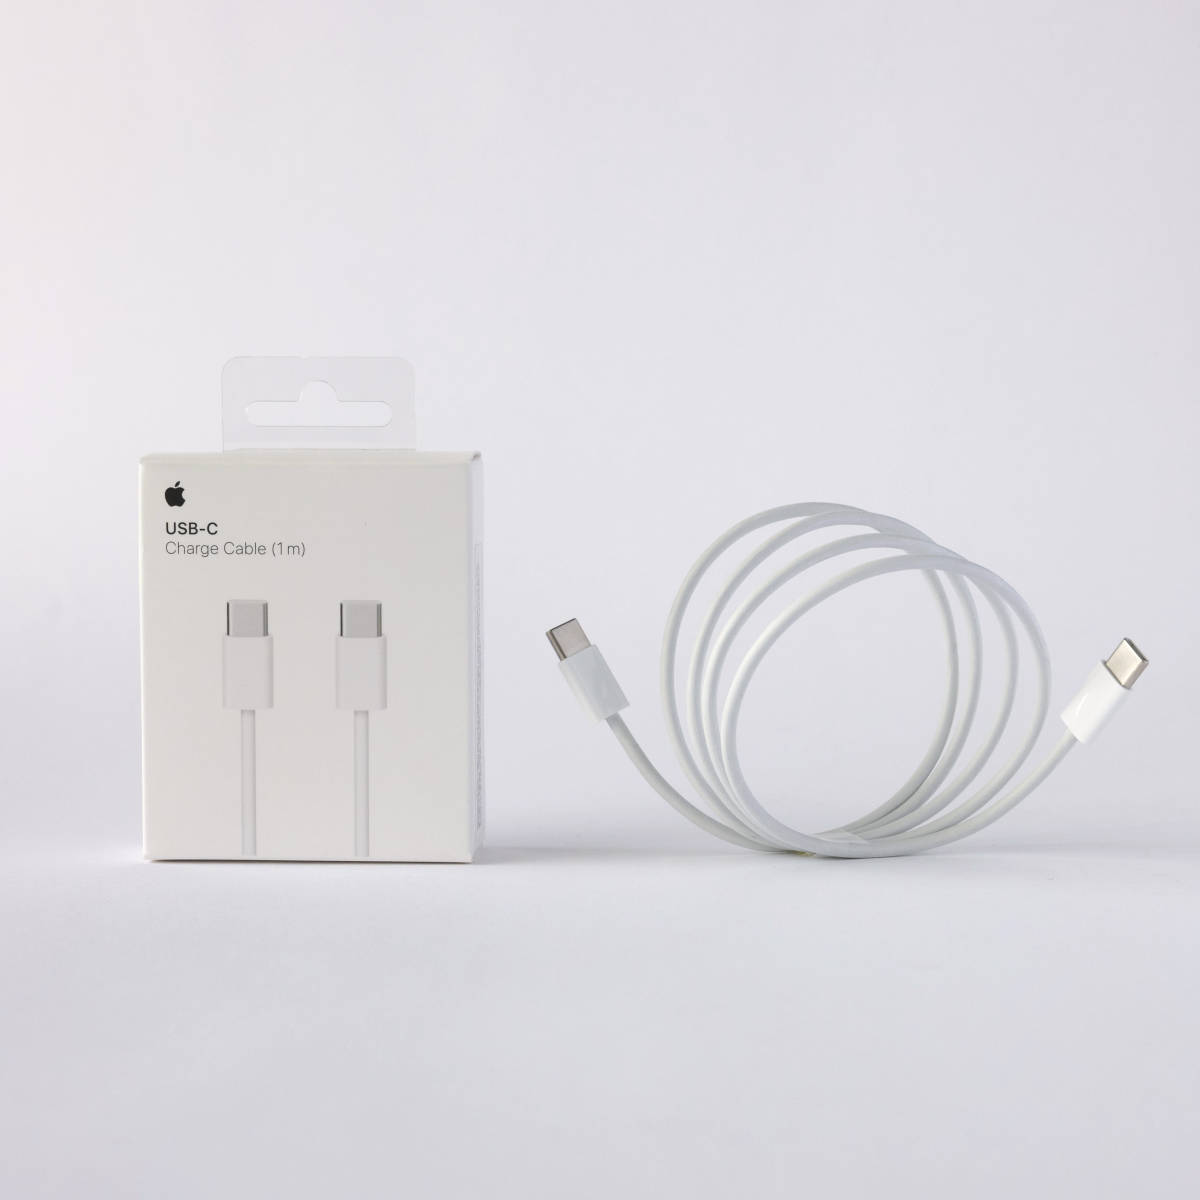 apple アップル 純正 USB-C Charge Cable 充電ケーブル 1m【美品】MUF72FE/A 純正 アクセサリー_元箱付、使用僅かの美品